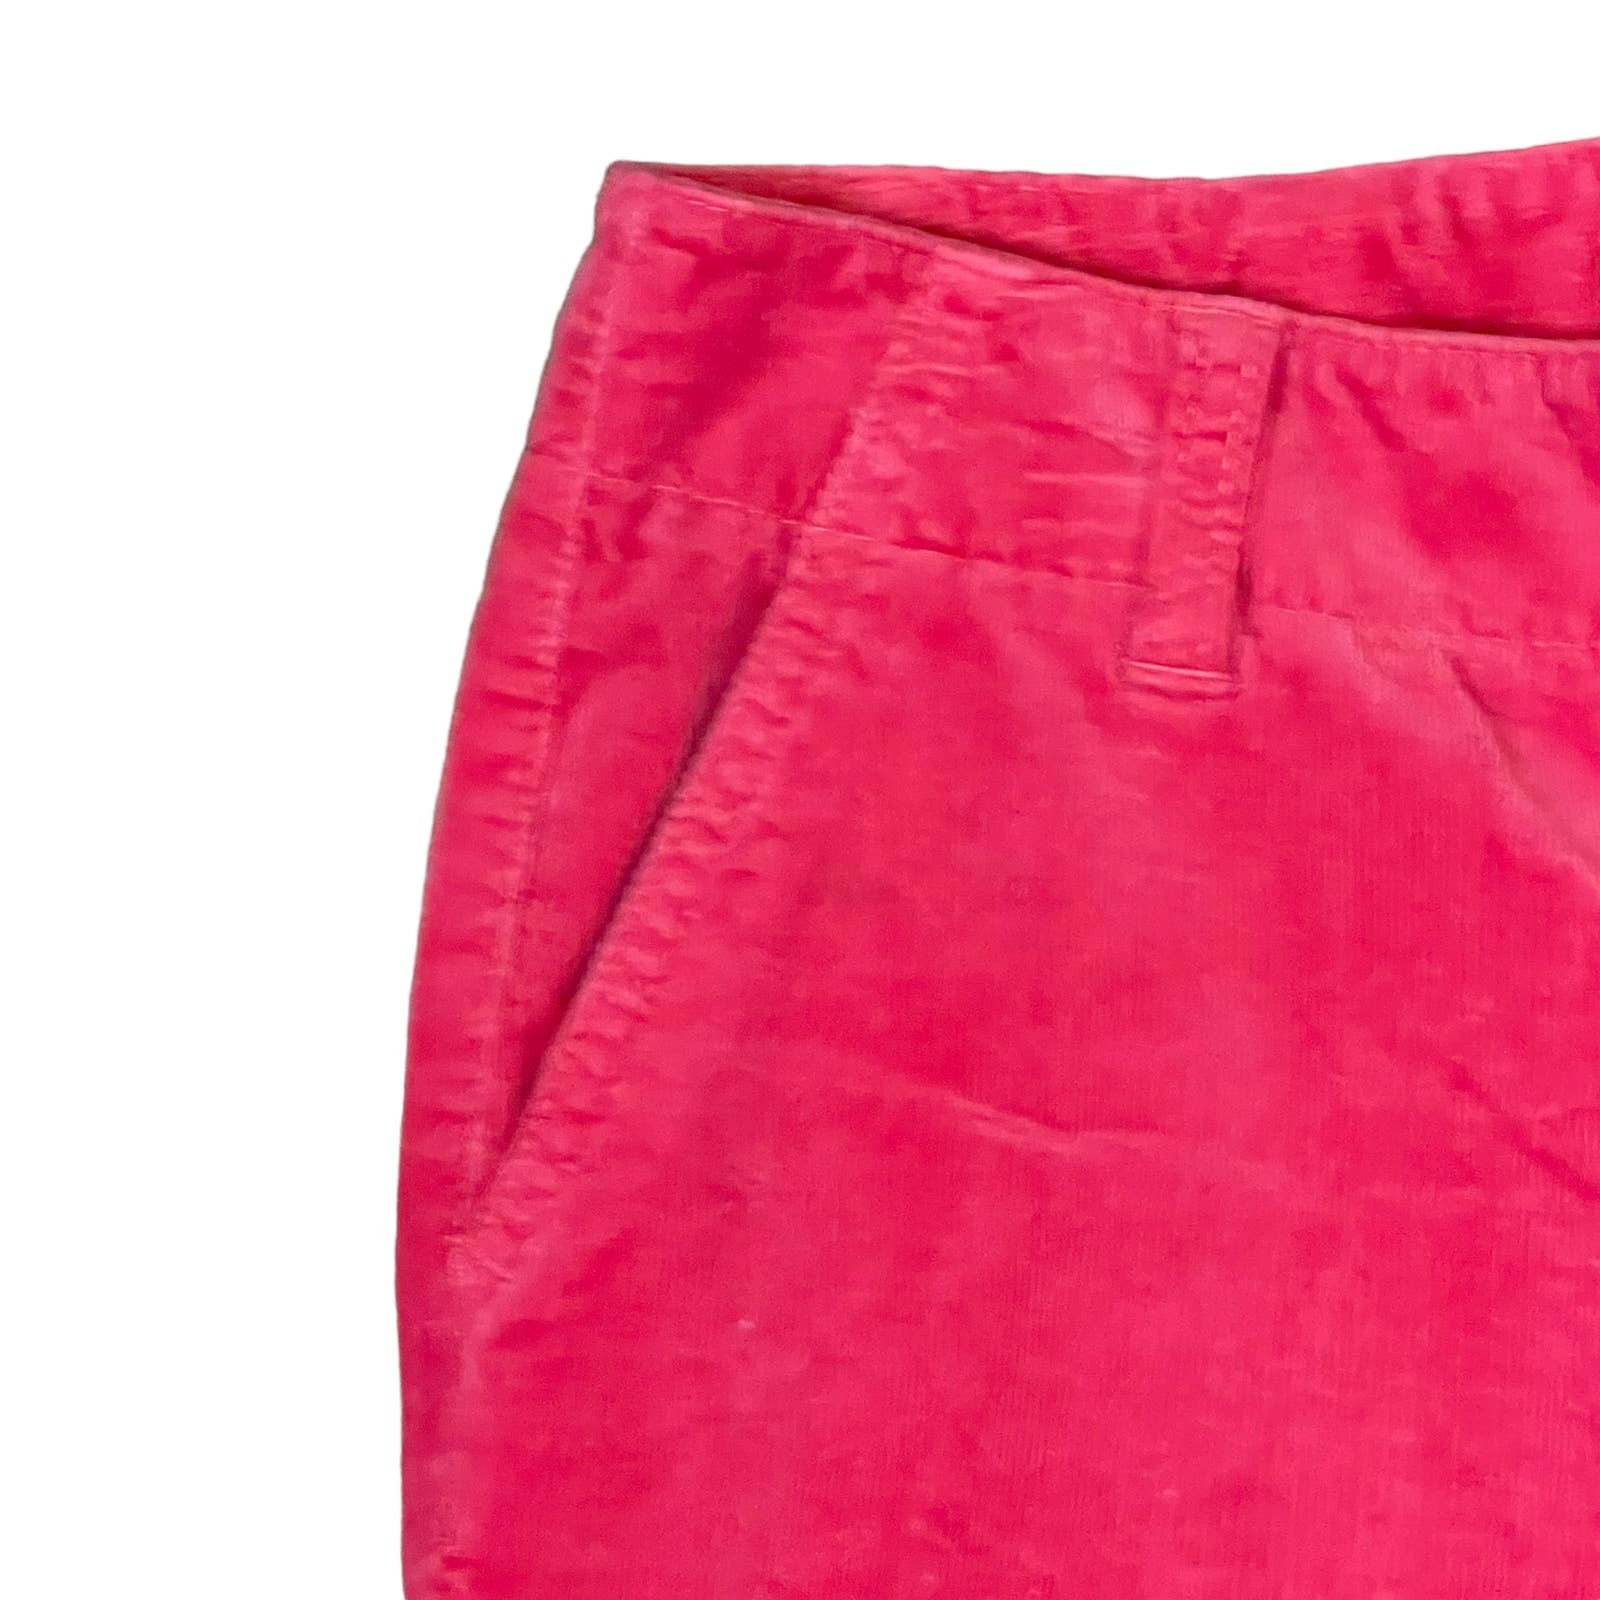 Stylish Express Fuchsia Pink Corduroy Cord Ankle Straight Leg Pants Stretch Women Size 0 oJ6OL9Pyx New Style